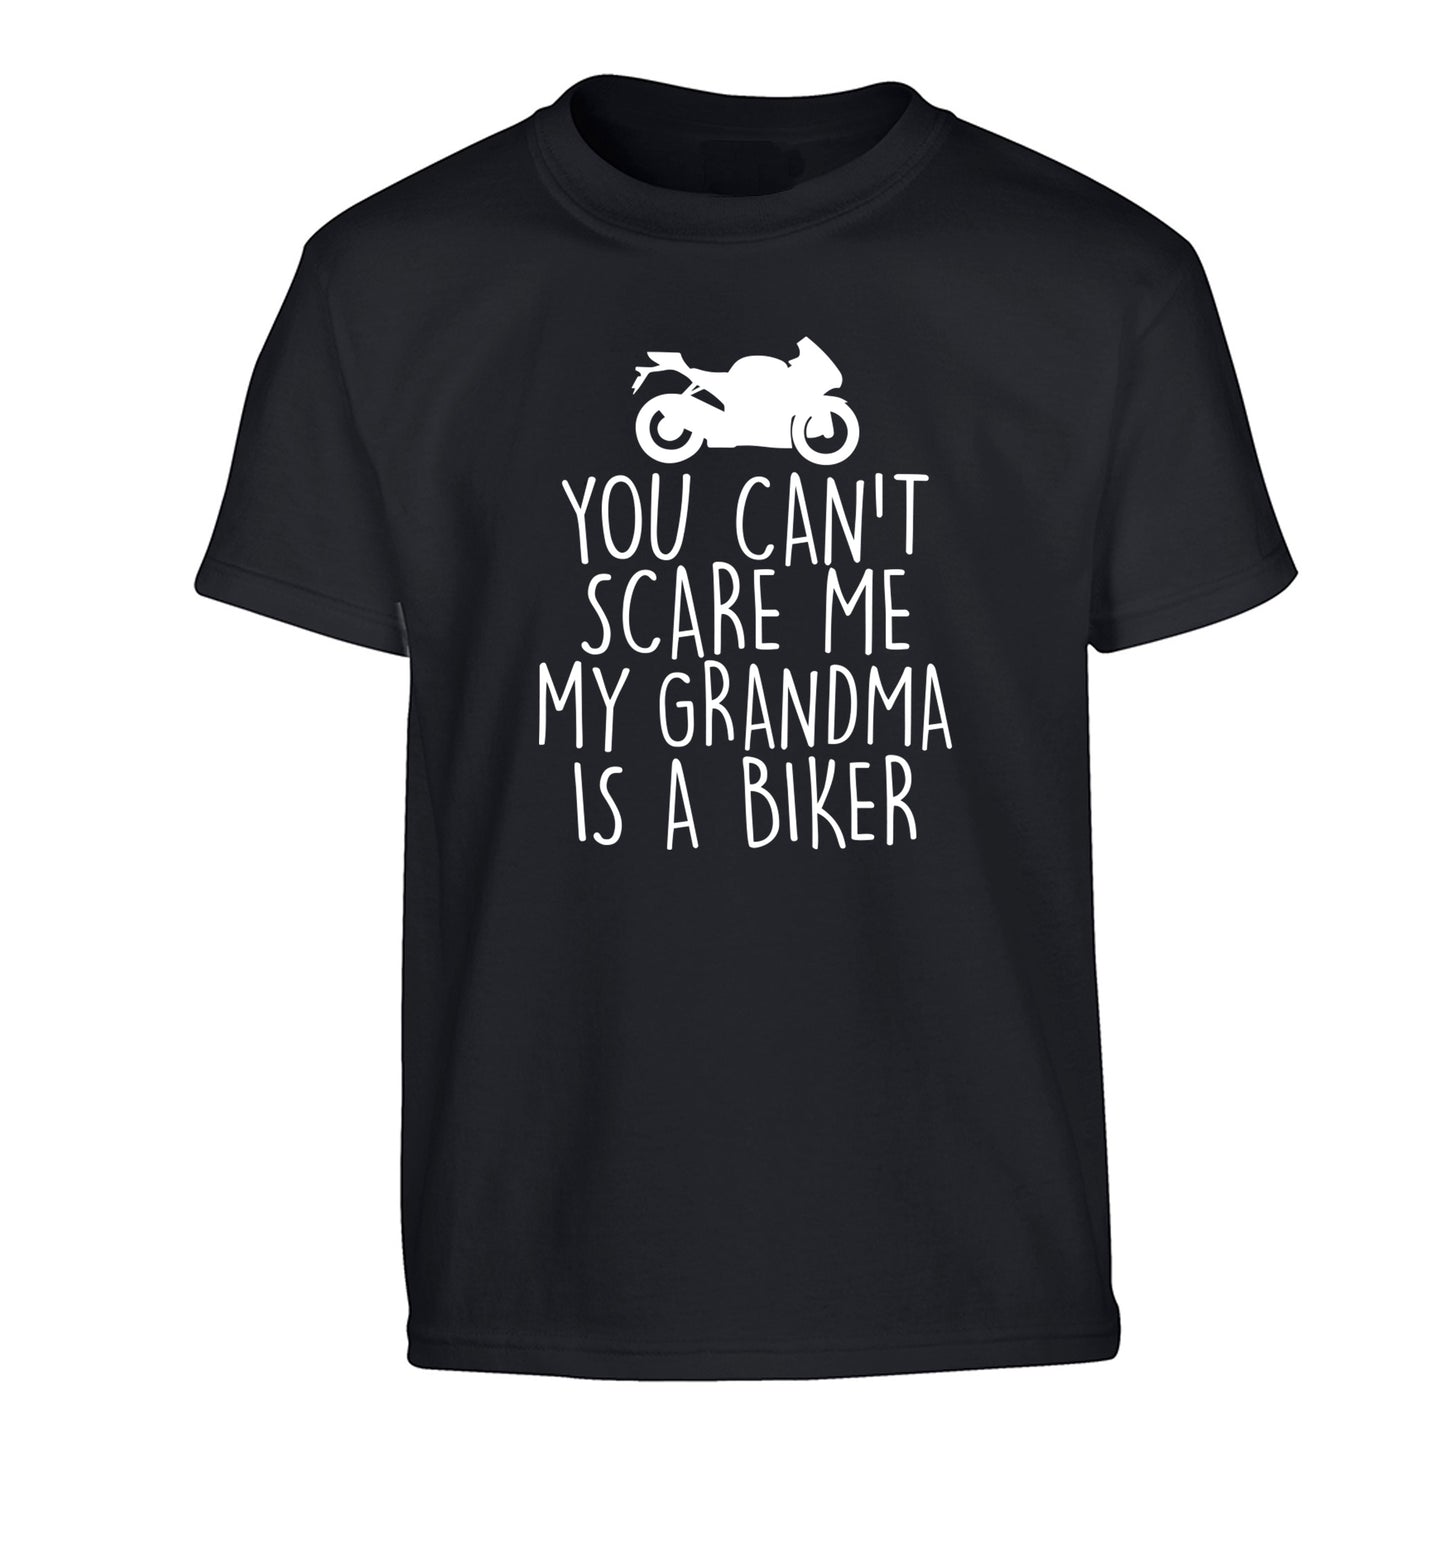 You can't scare me my grandma is a biker Children's black Tshirt 12-13 Years